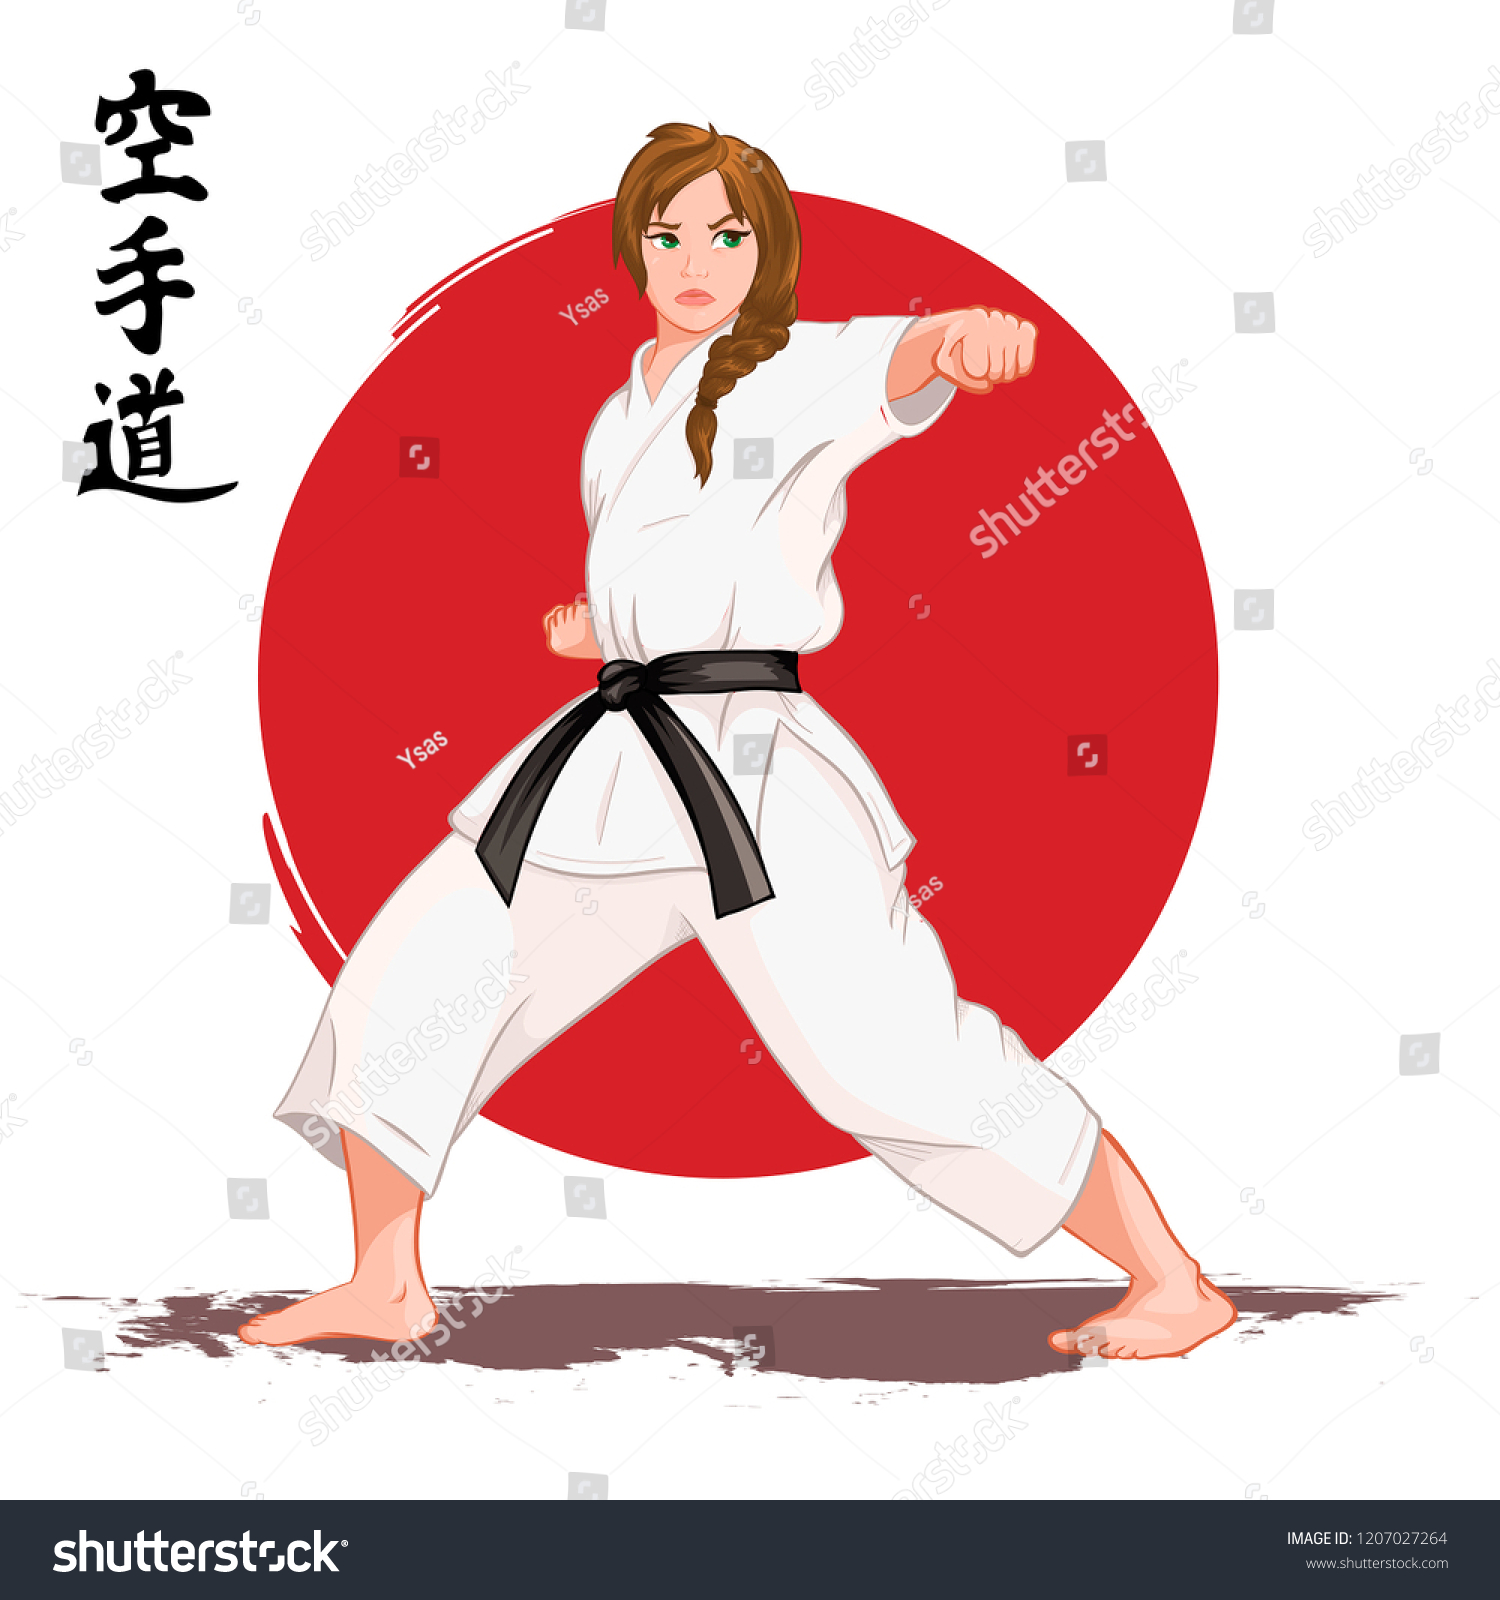 Karate Woman Vector Illustration Royalty Free Stock Vector 1207027264 